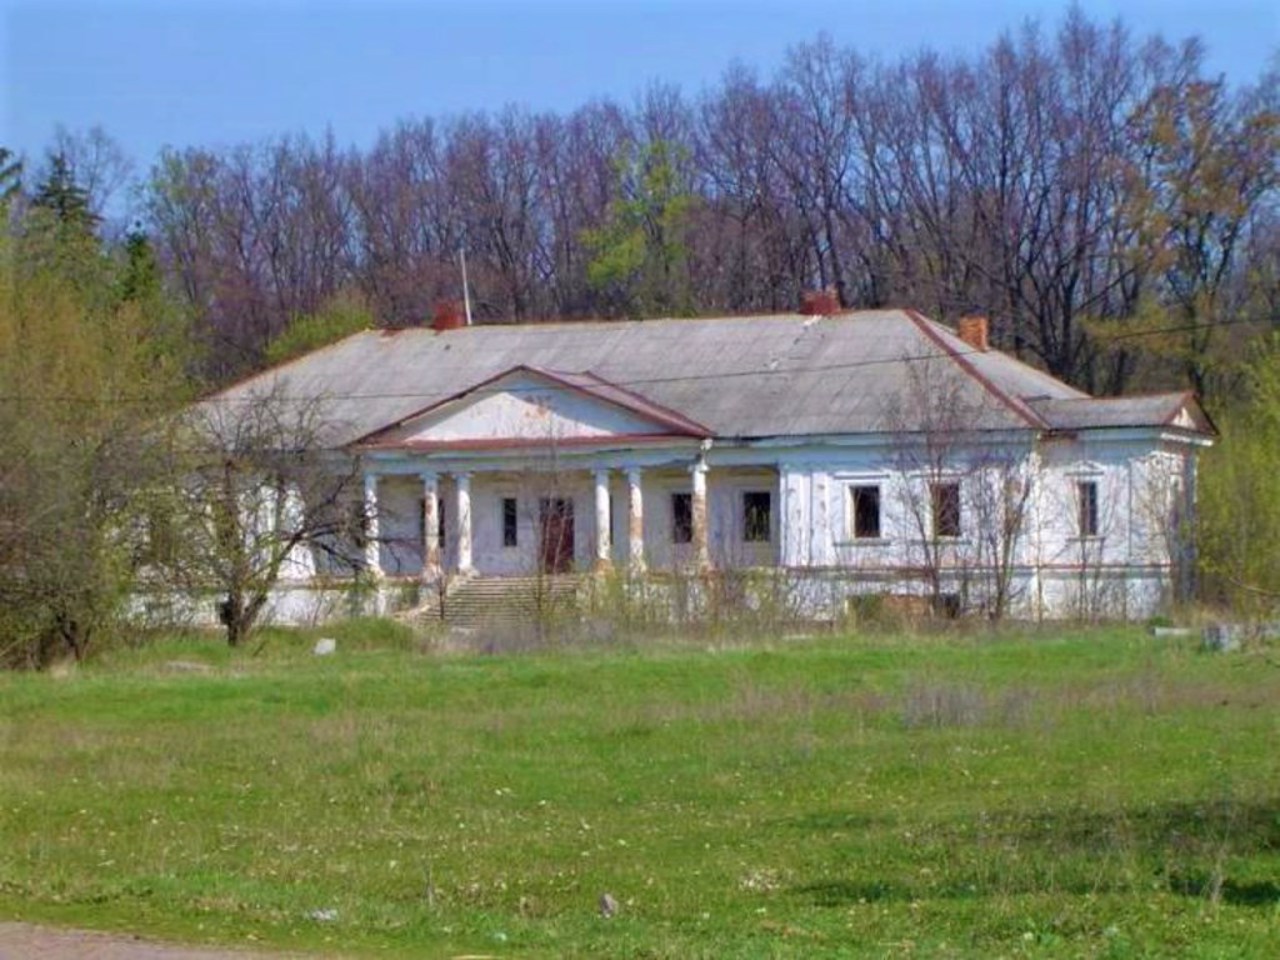 Stsybor-Rylsky Estate, Brovky Pershi